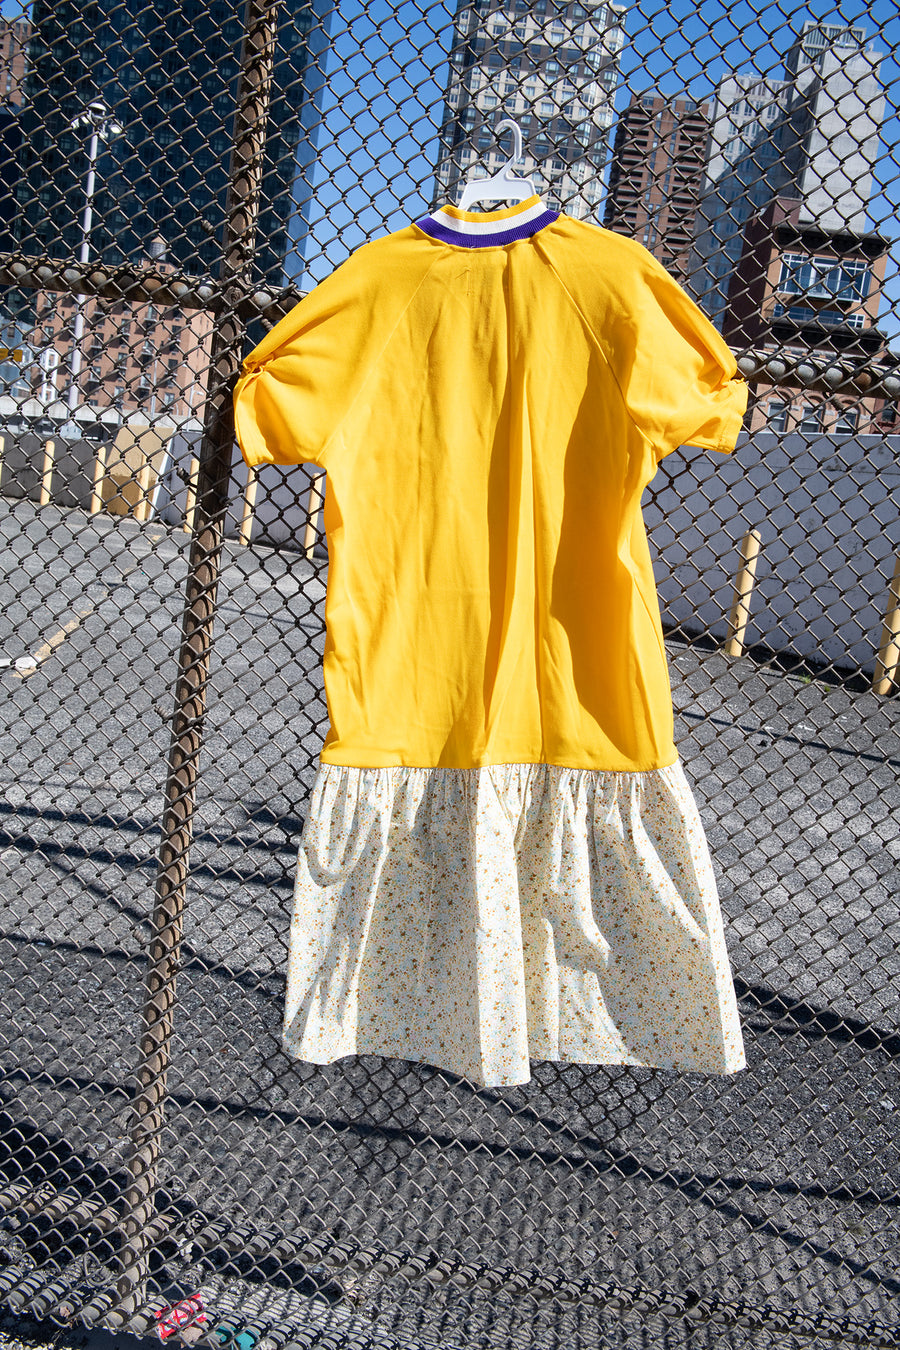 BATSHEVA - One-of-a-Kind Vintage Lakers Jersey Dress